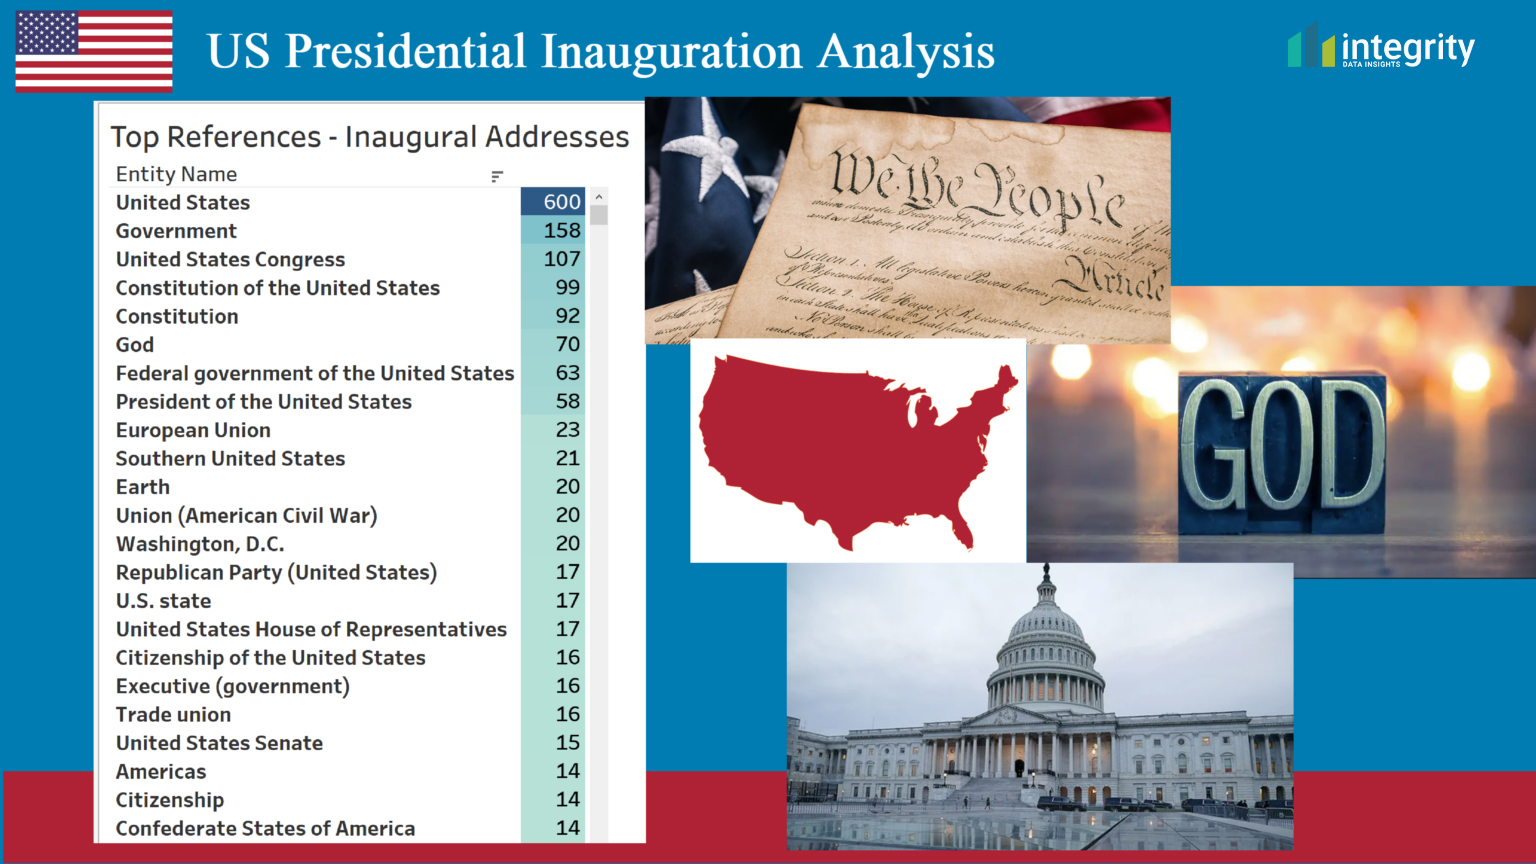 Key words used in presidential inaugural addresses